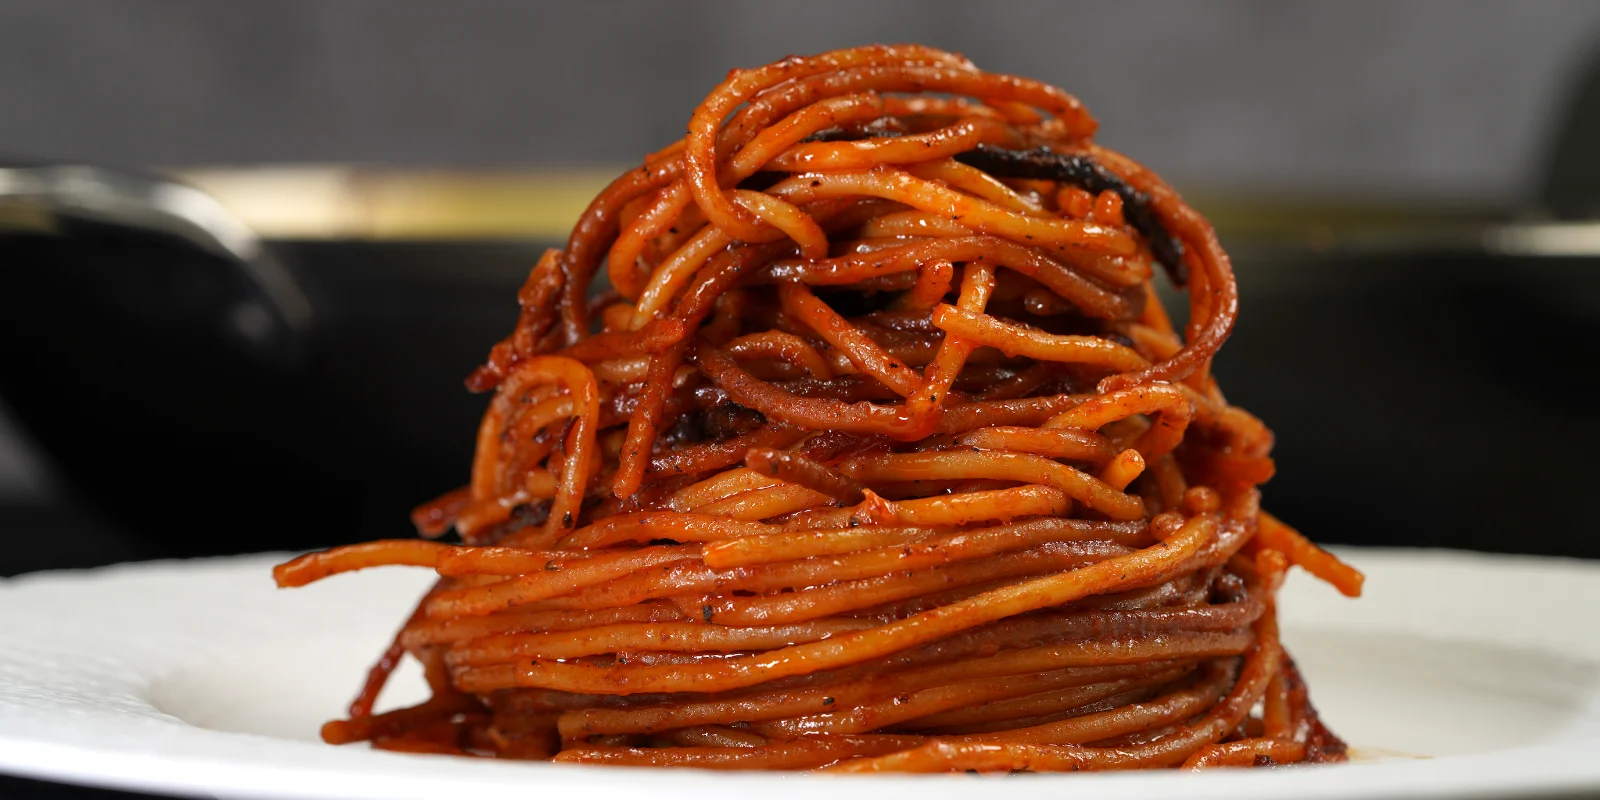 How to make Spaghetti all'Assassina like an ItalianVincenzo's Plate